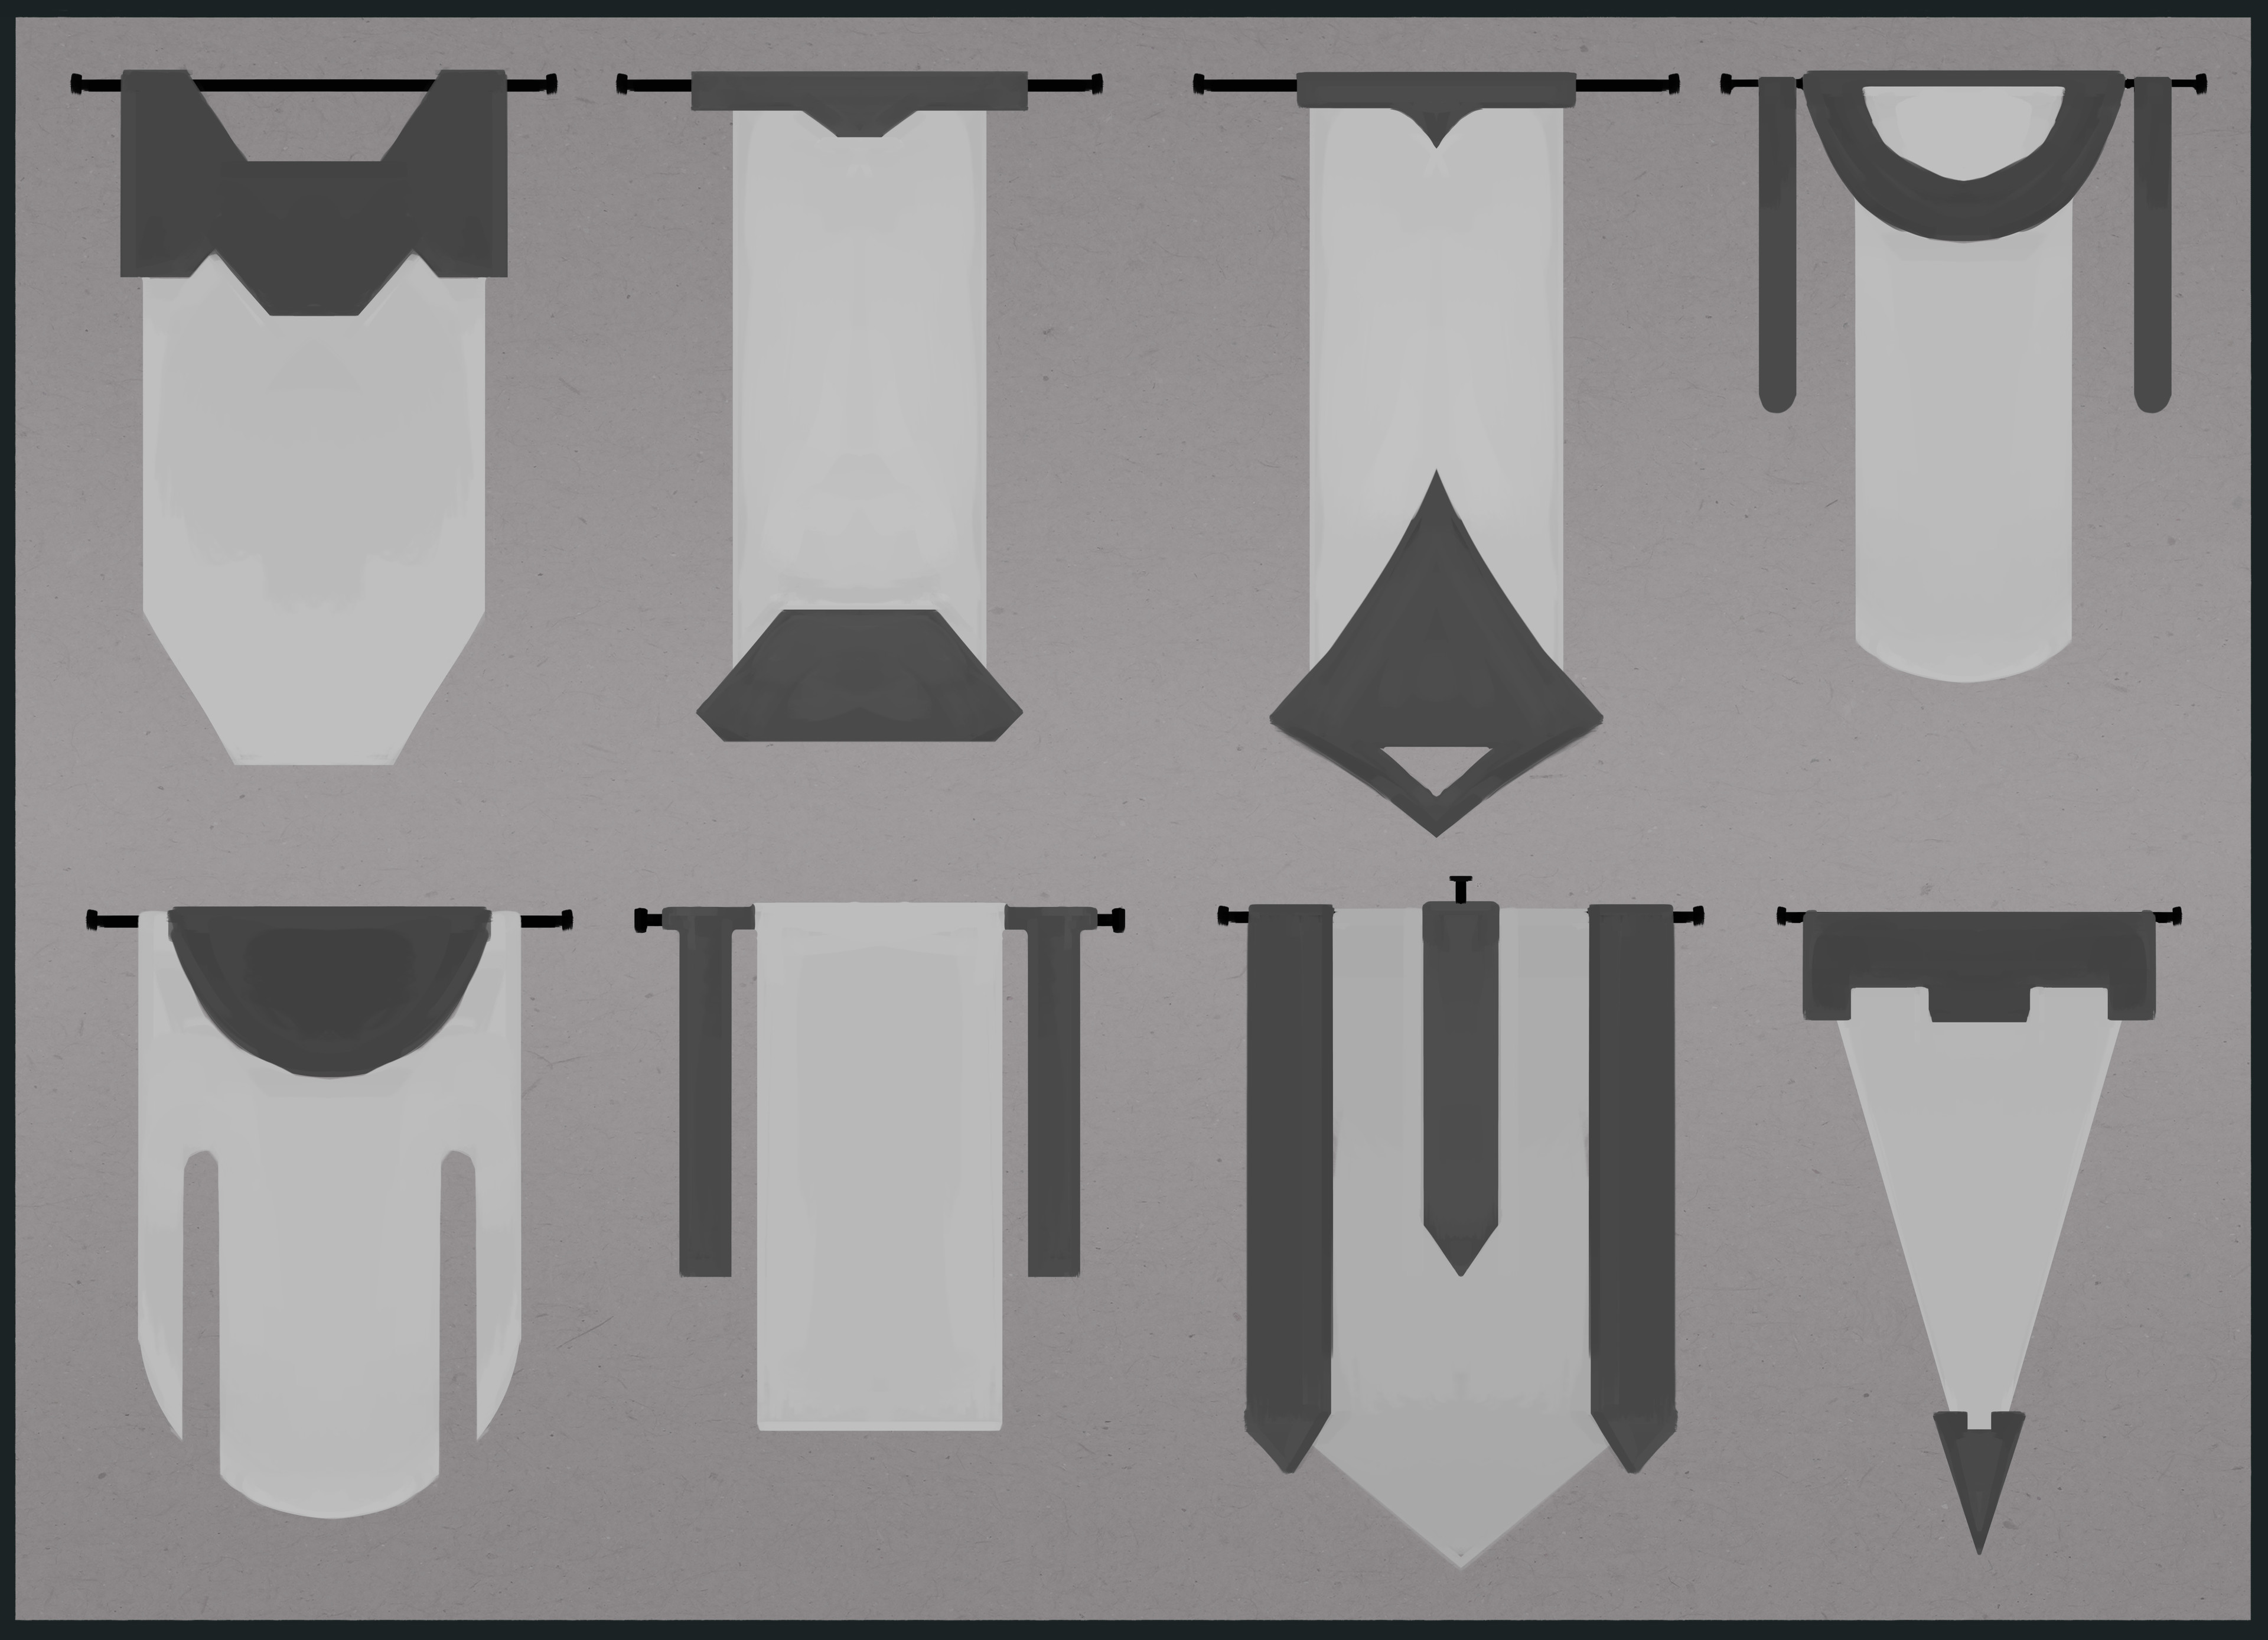 Initial shape designs